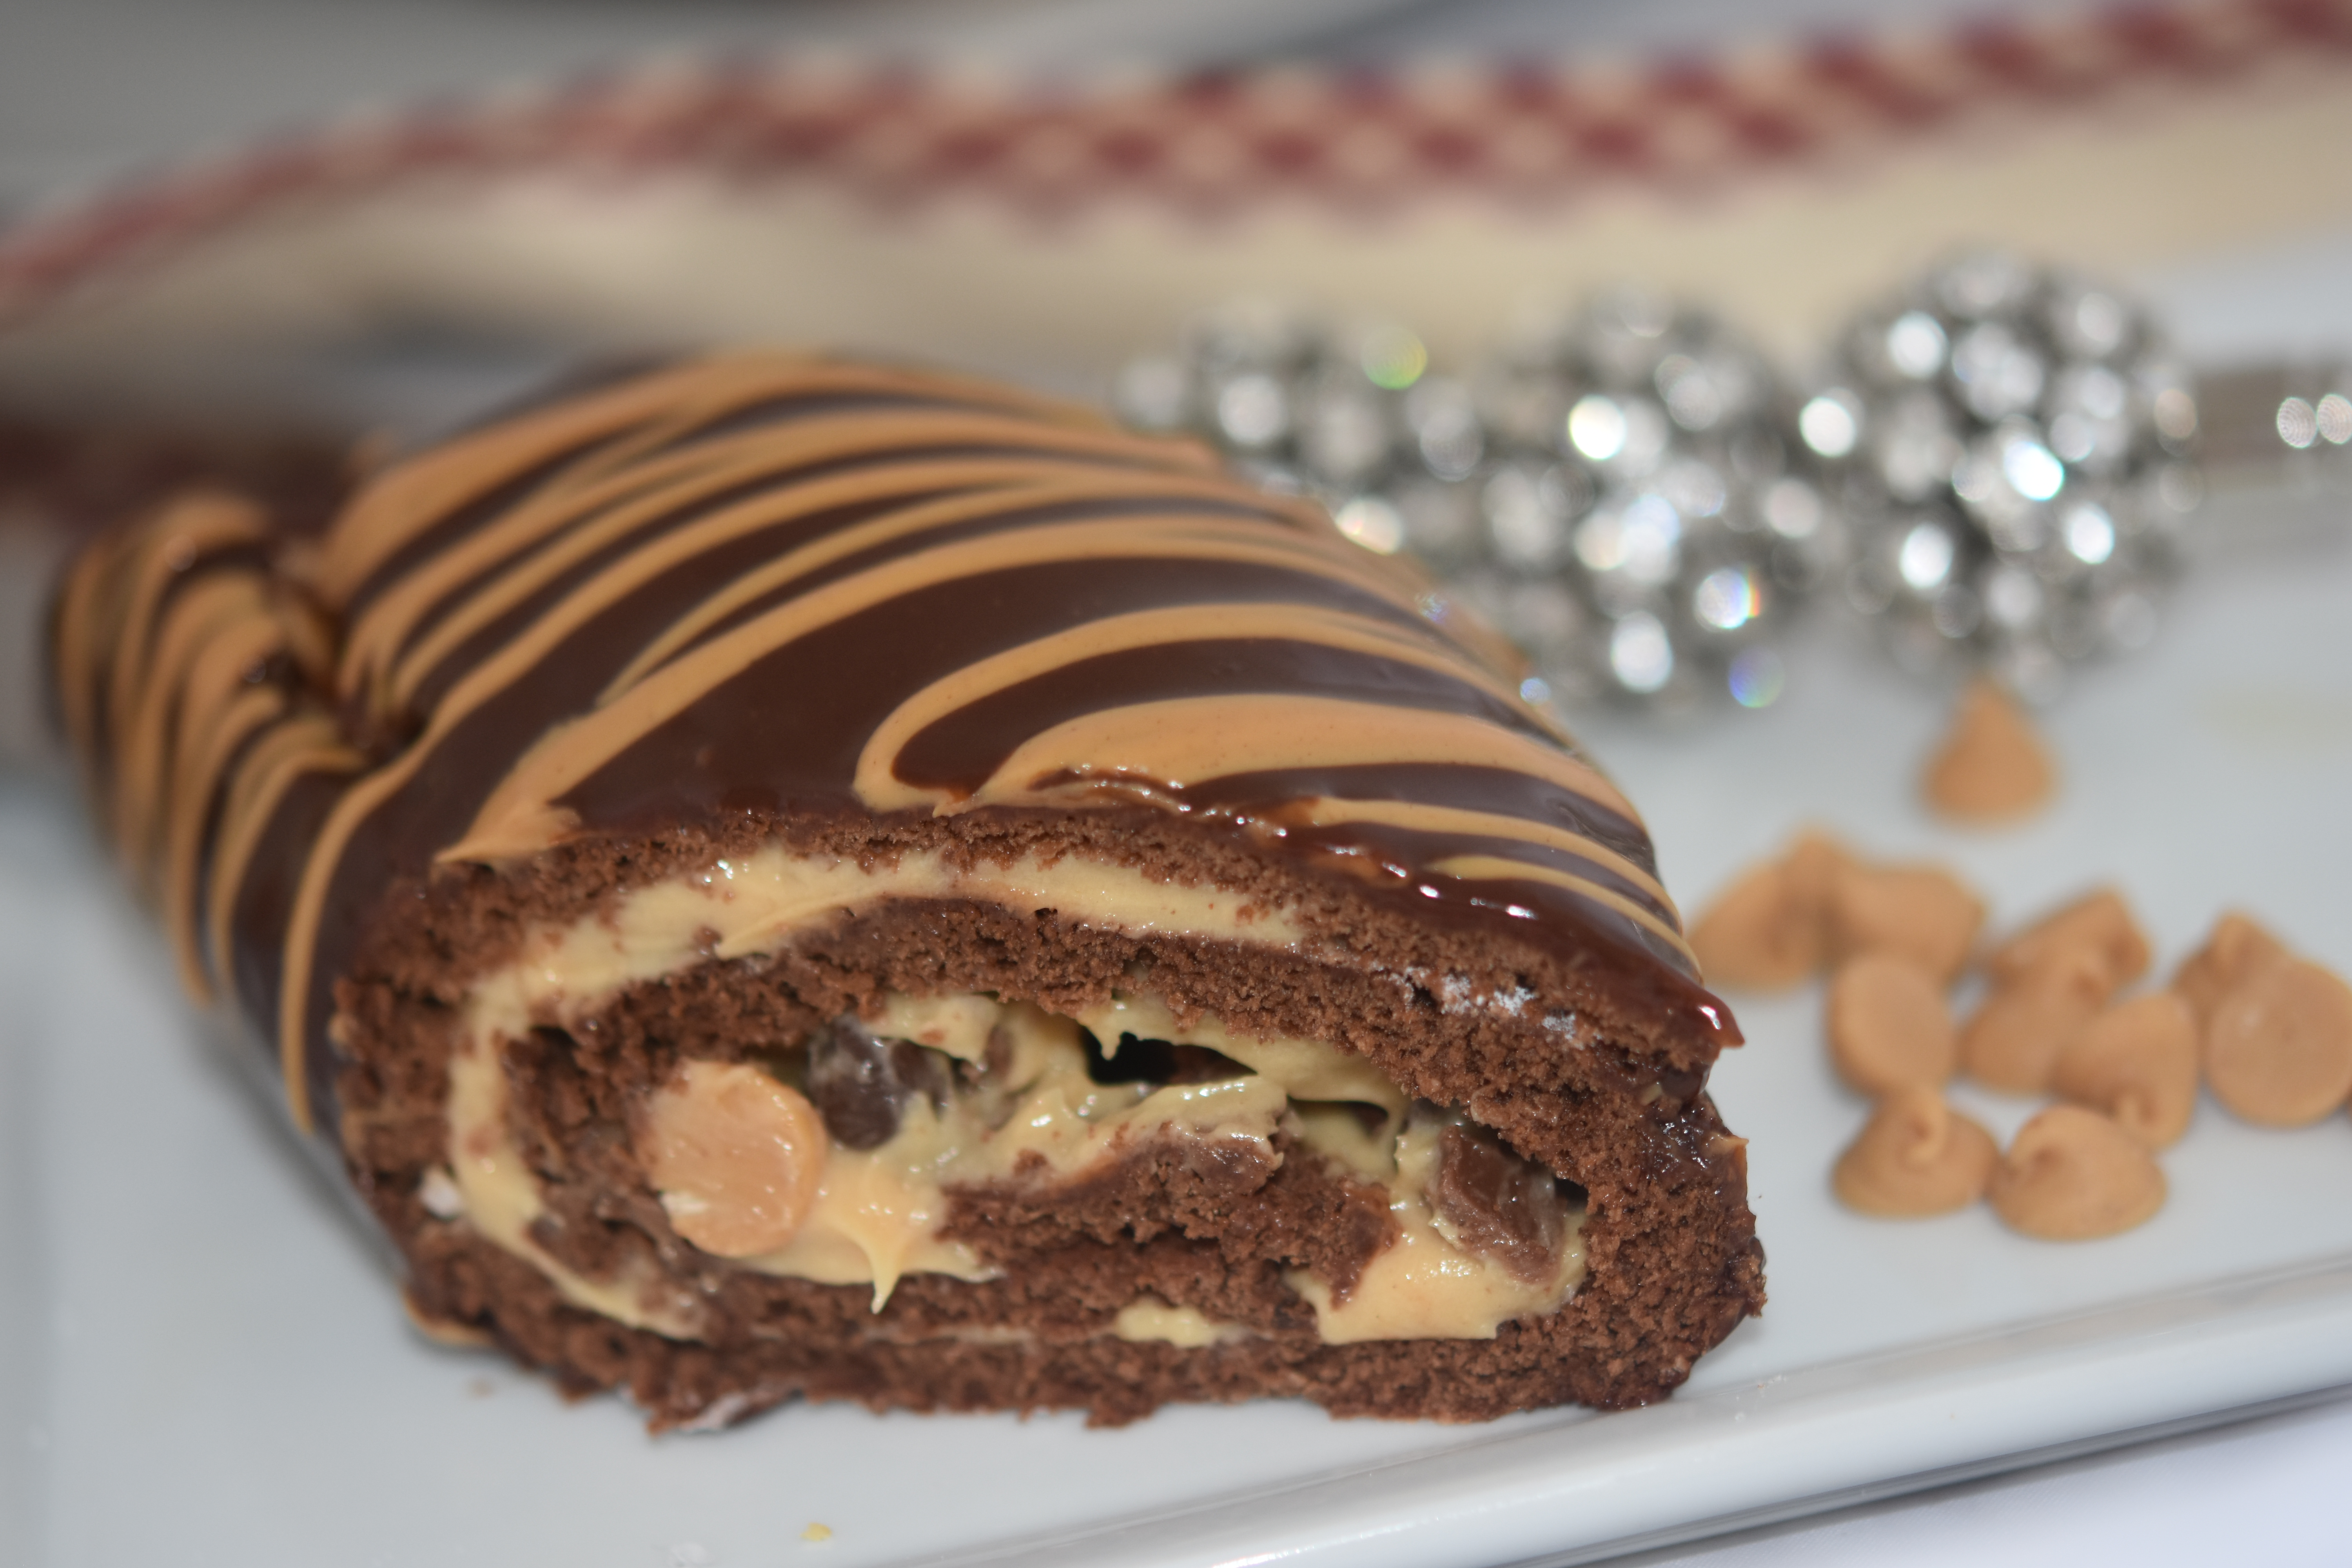 Peanut Butter Chocolate Cake Roll